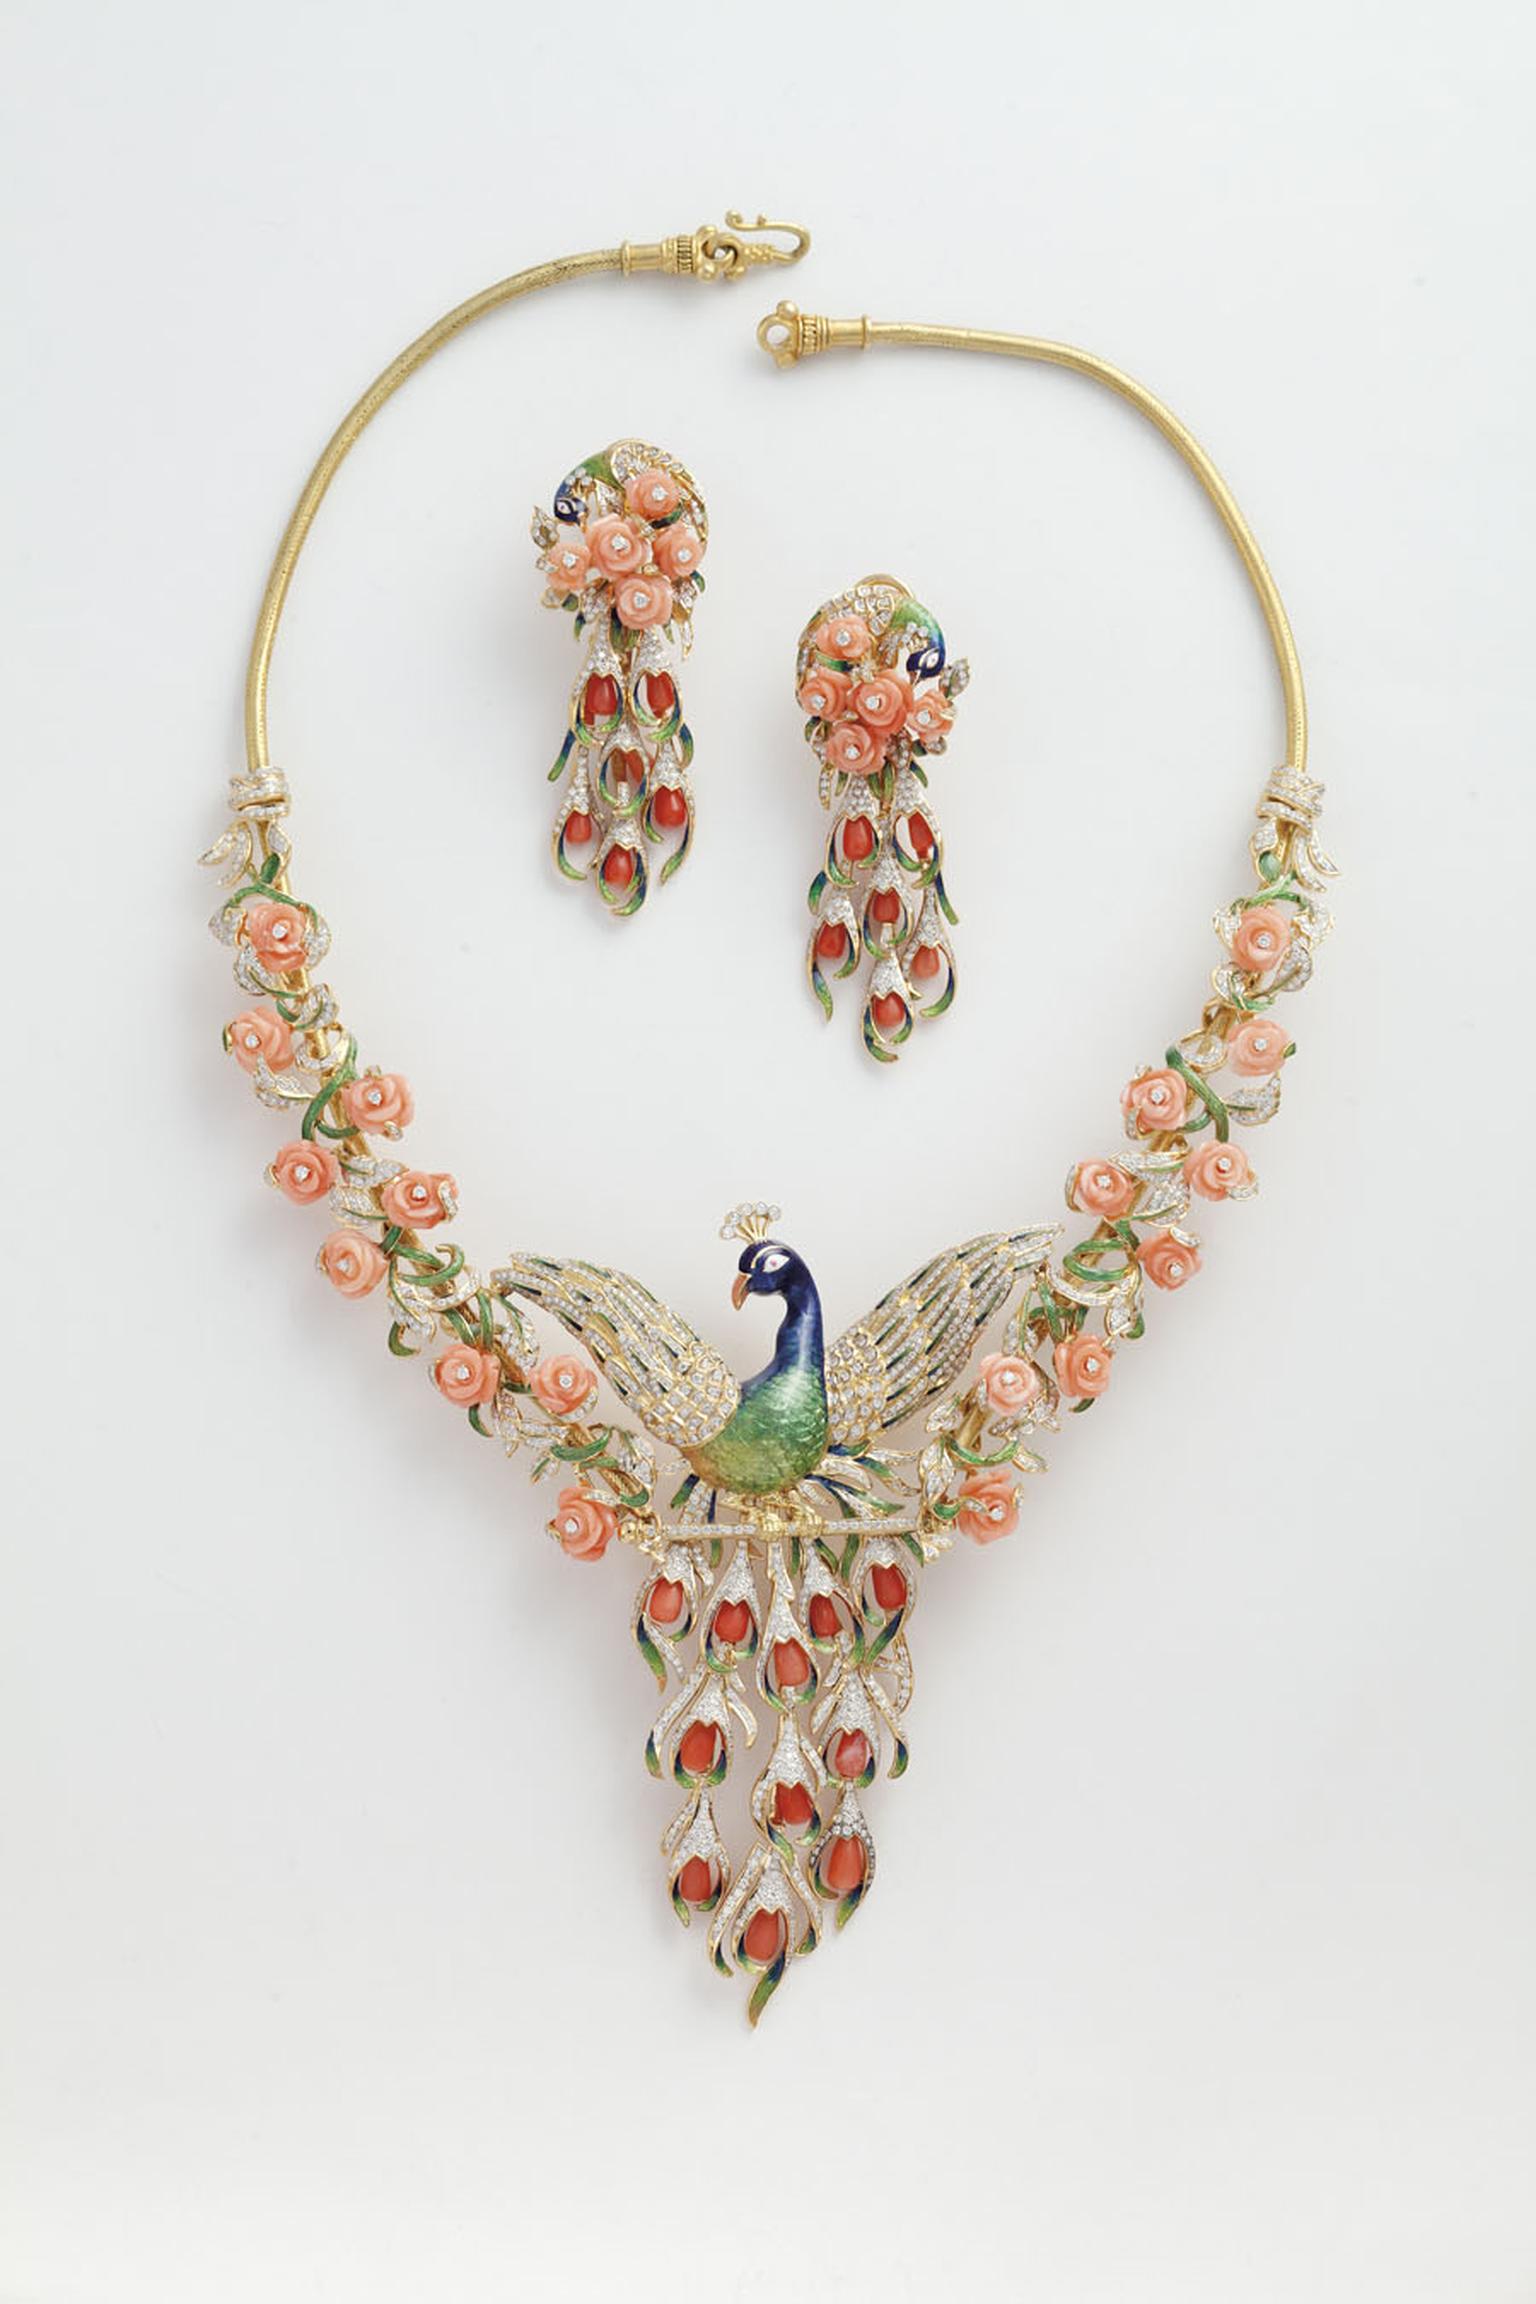 Jewels Emporium Peacock necklace in enamel